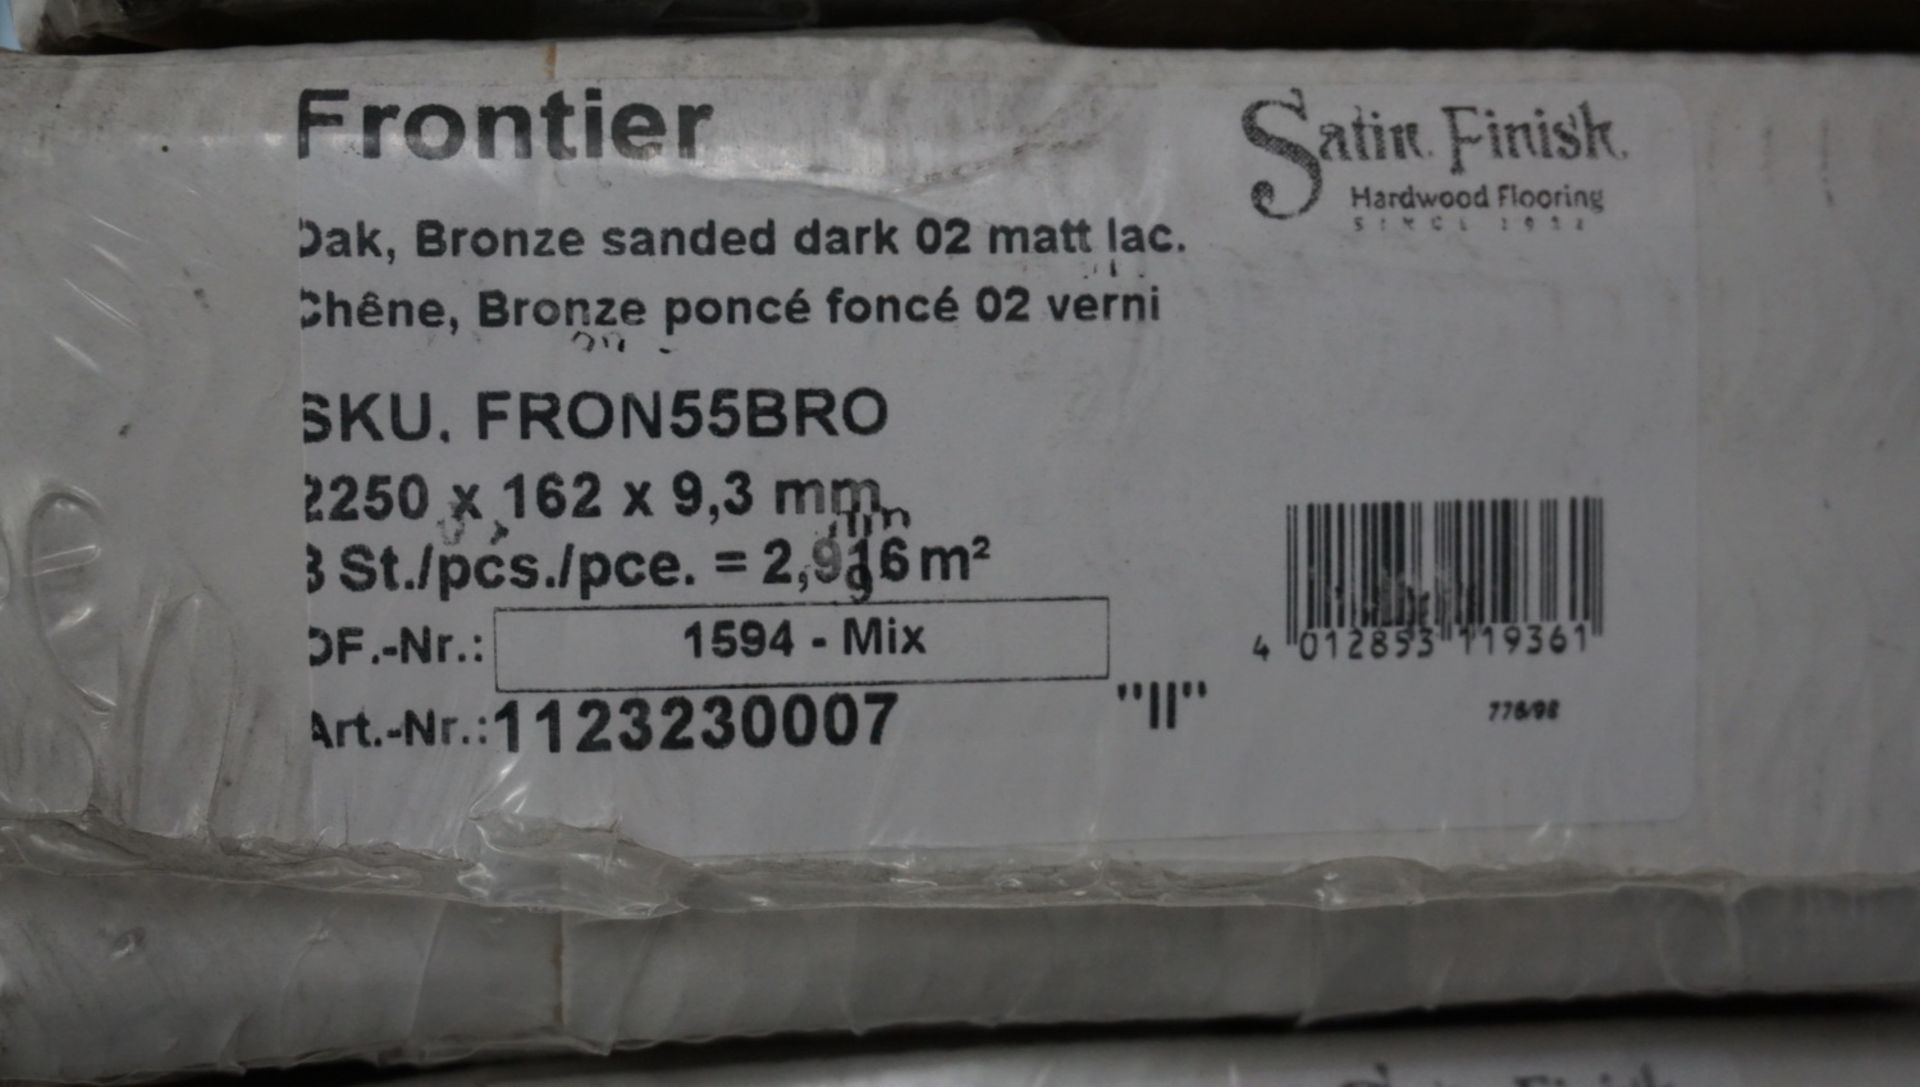 BOXES - SATIN FINISH FRONTIER (55BRO) OAK BRONZE SANDED DARK 02-MATTE 2250 X162 X 9.3MM ENGINEERED - Image 2 of 3